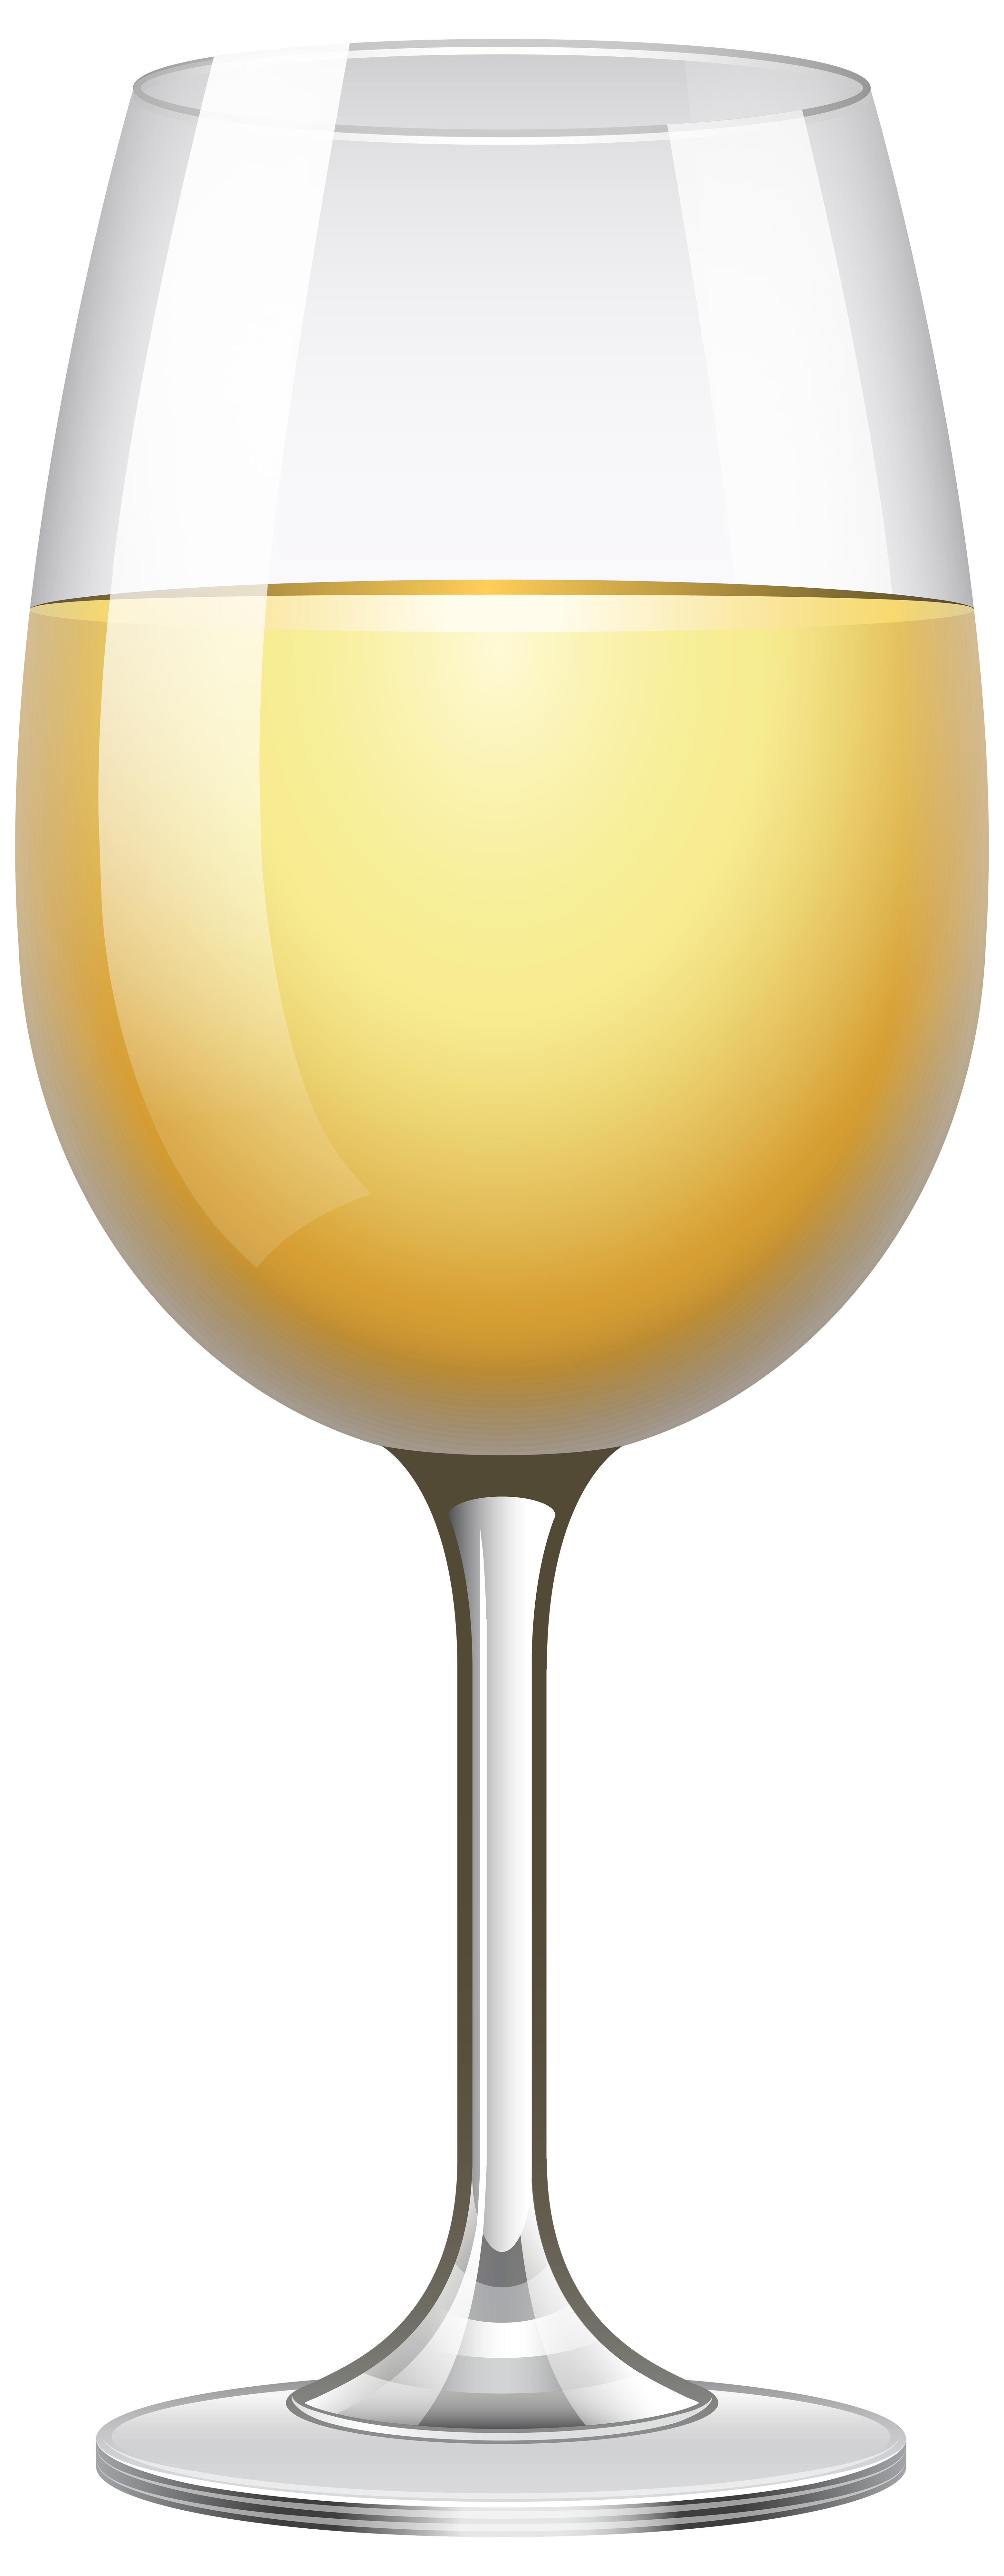 clipart wine glass free - photo #34